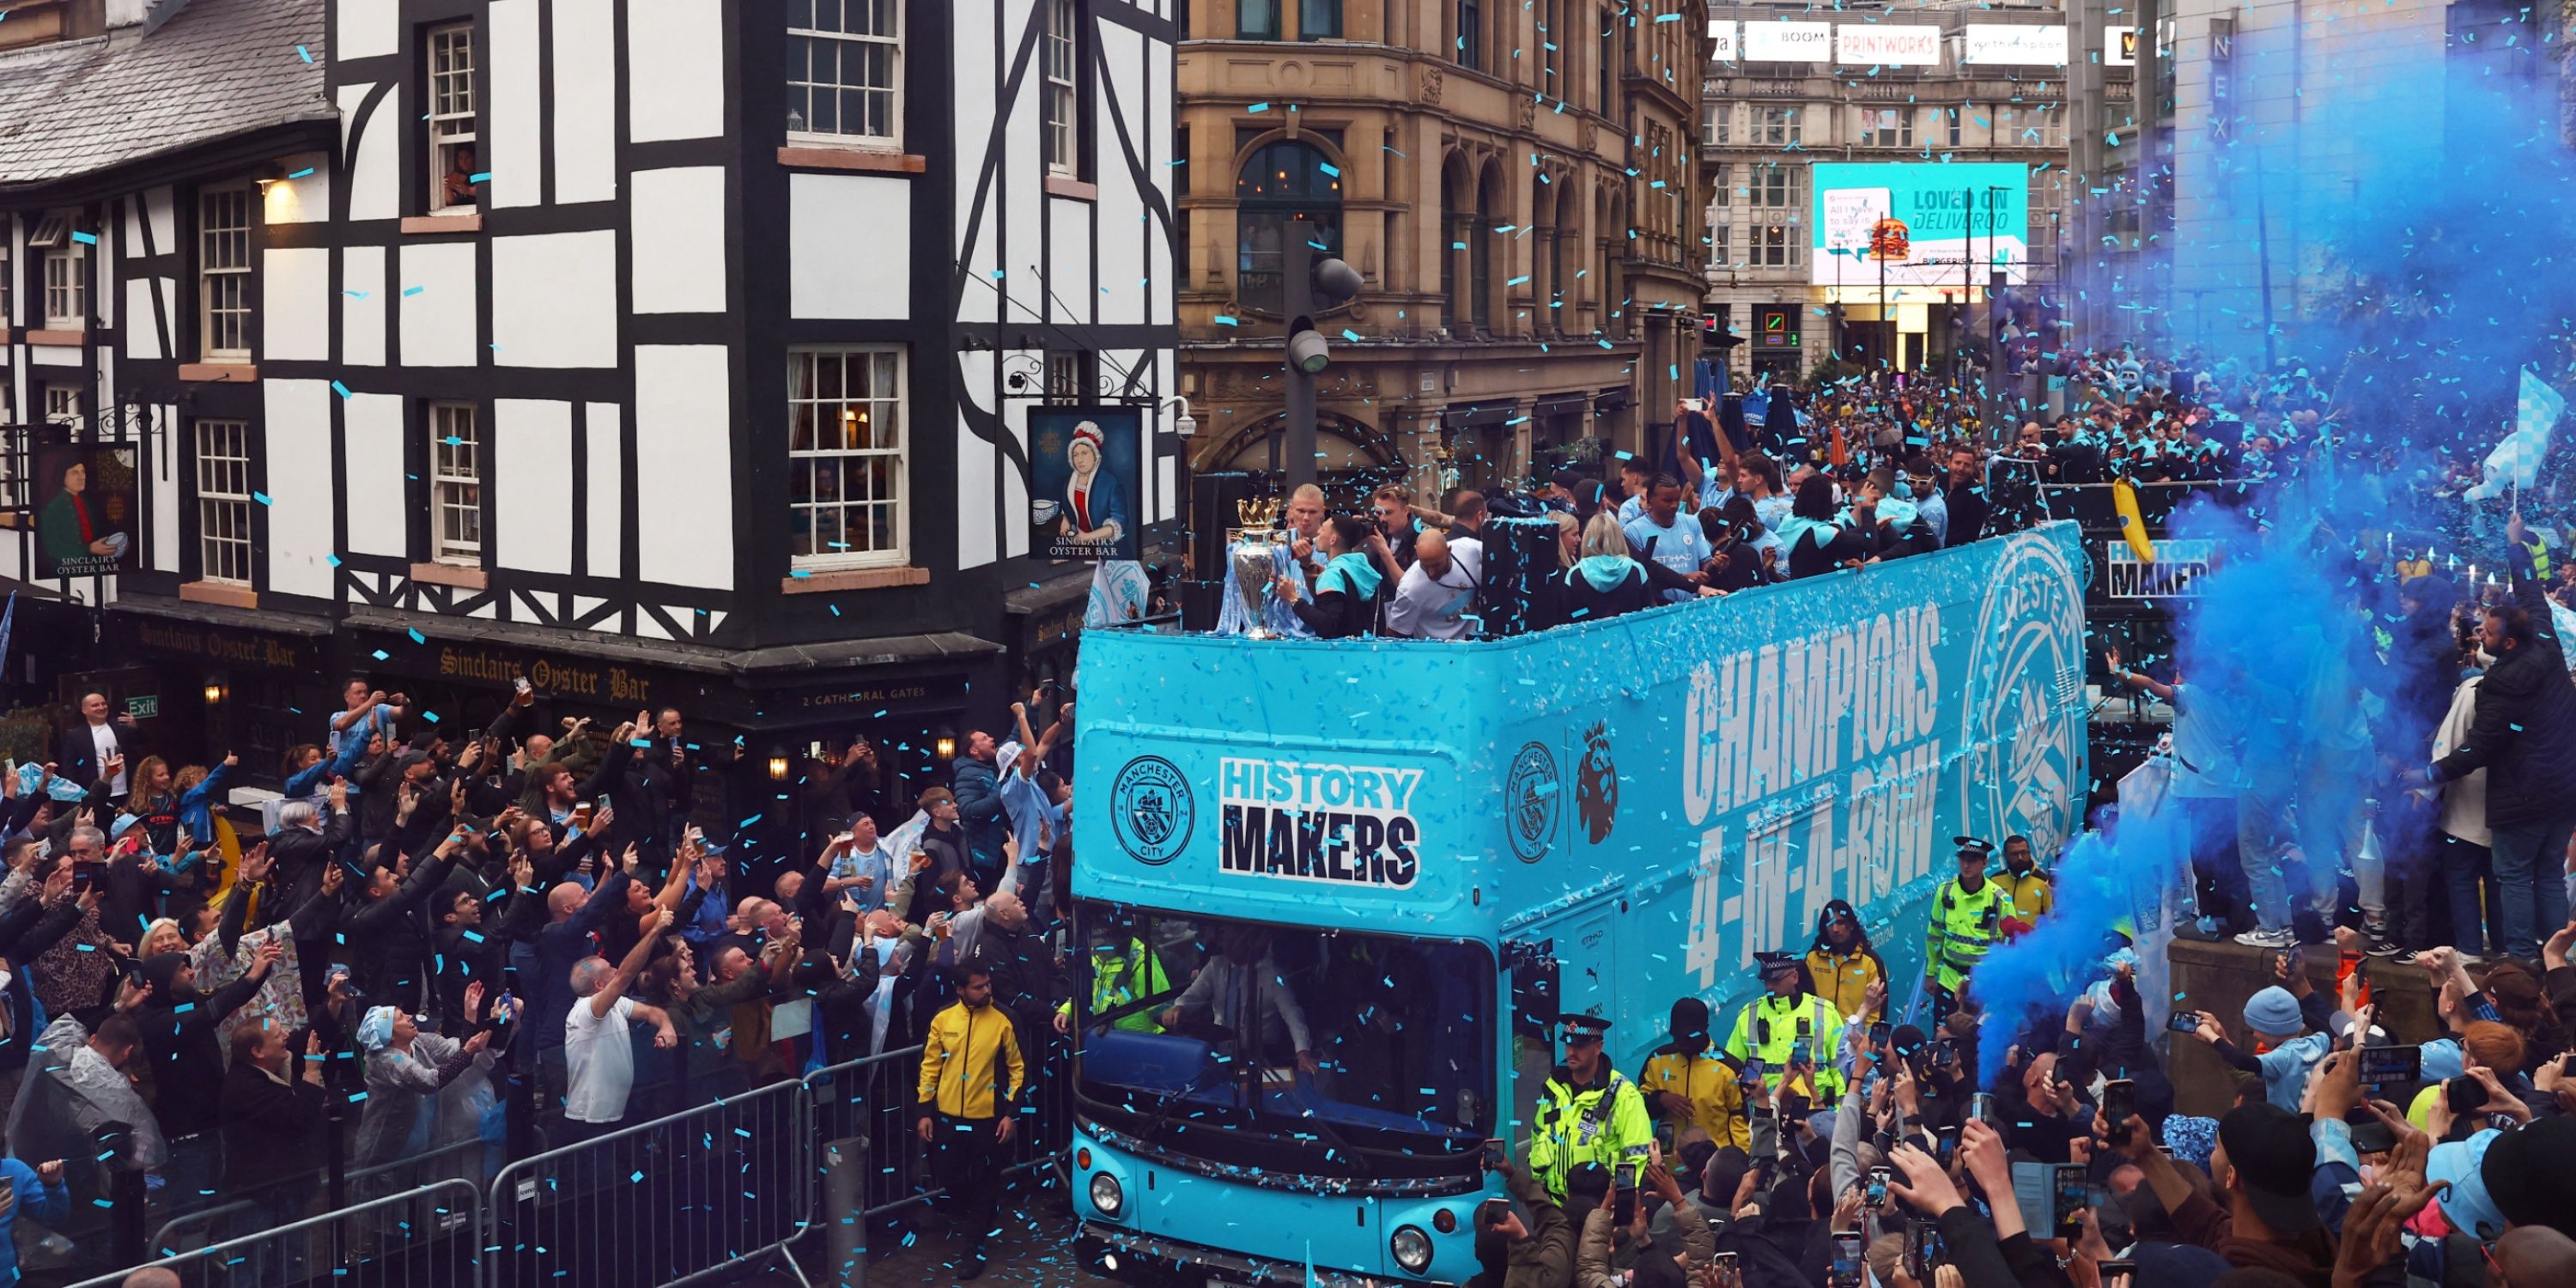 Manchester City's parade